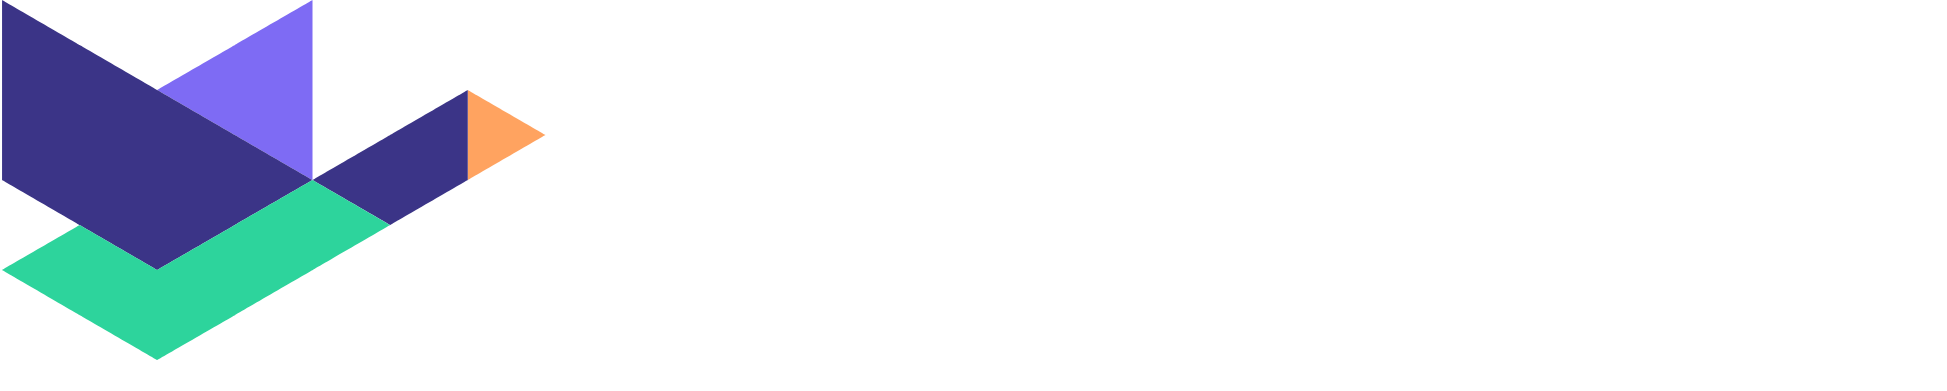 Duck Creek Technologies Logo groß für dunkle Hintergründe (transparentes PNG)